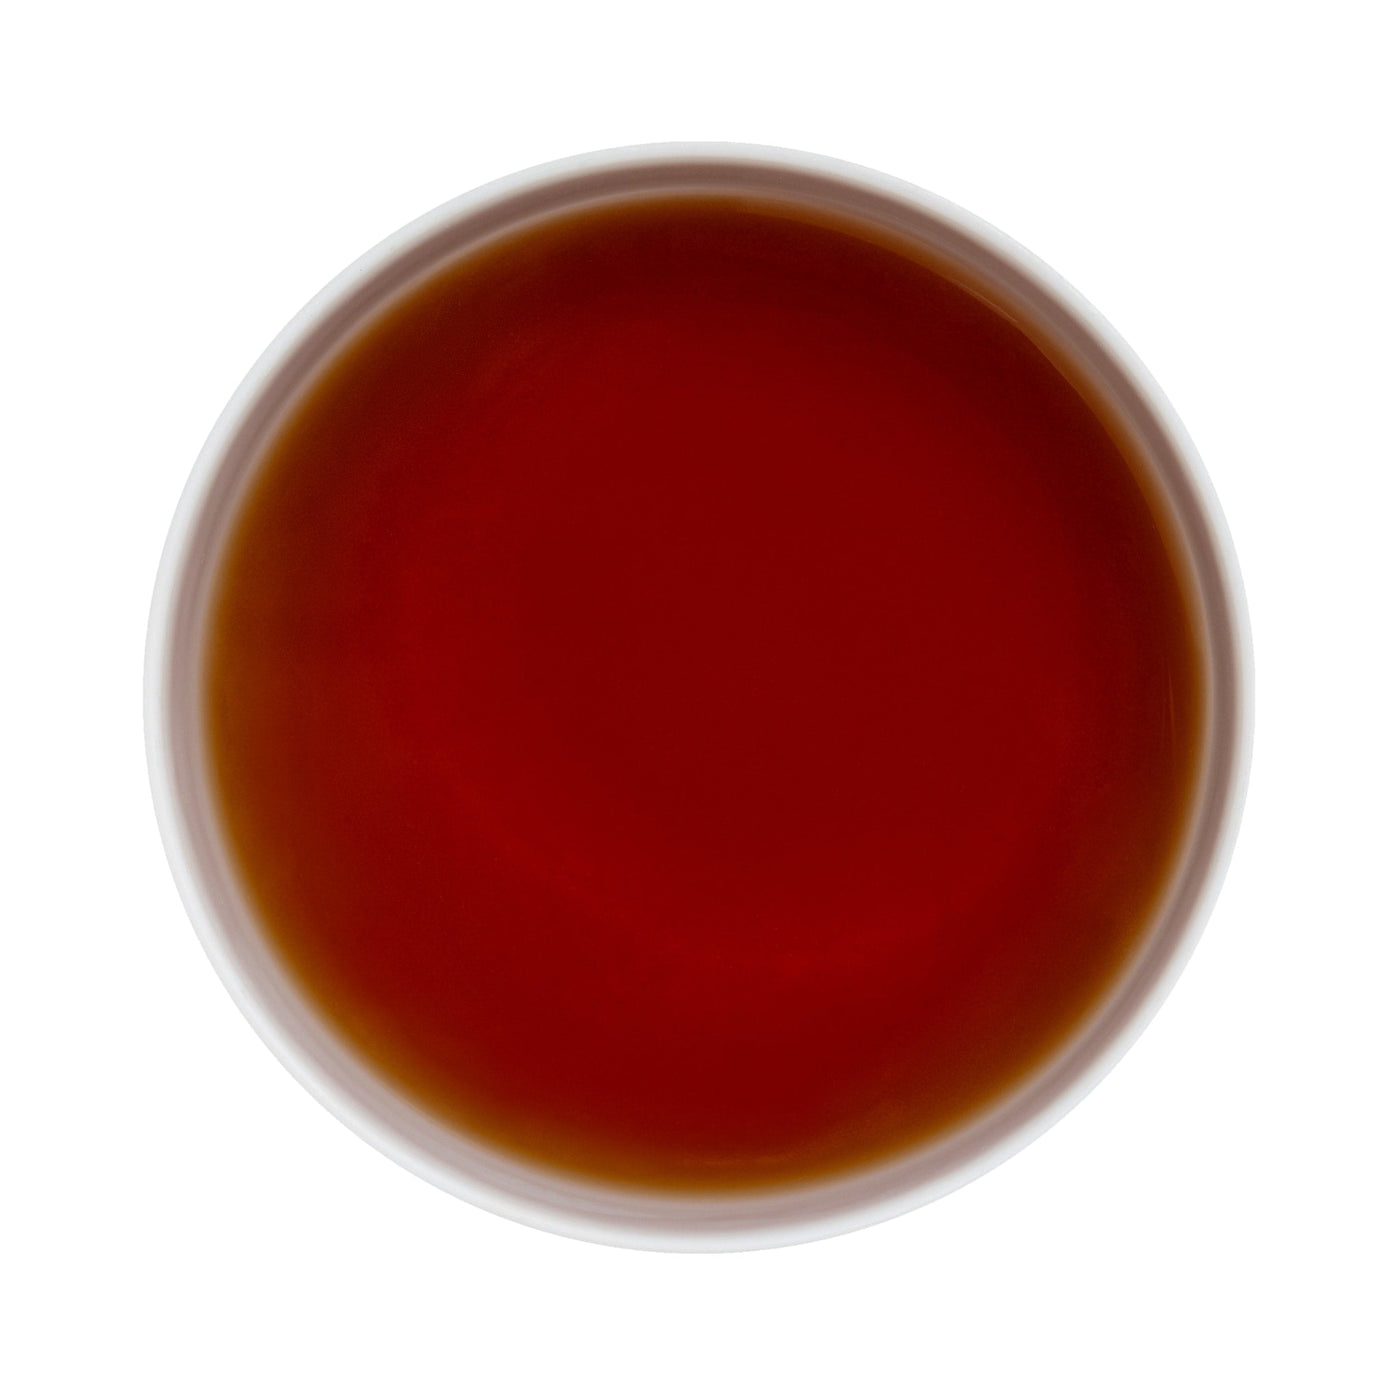 Nordqvist Traditional Blend 80g - Premium Loose Leaf Tea